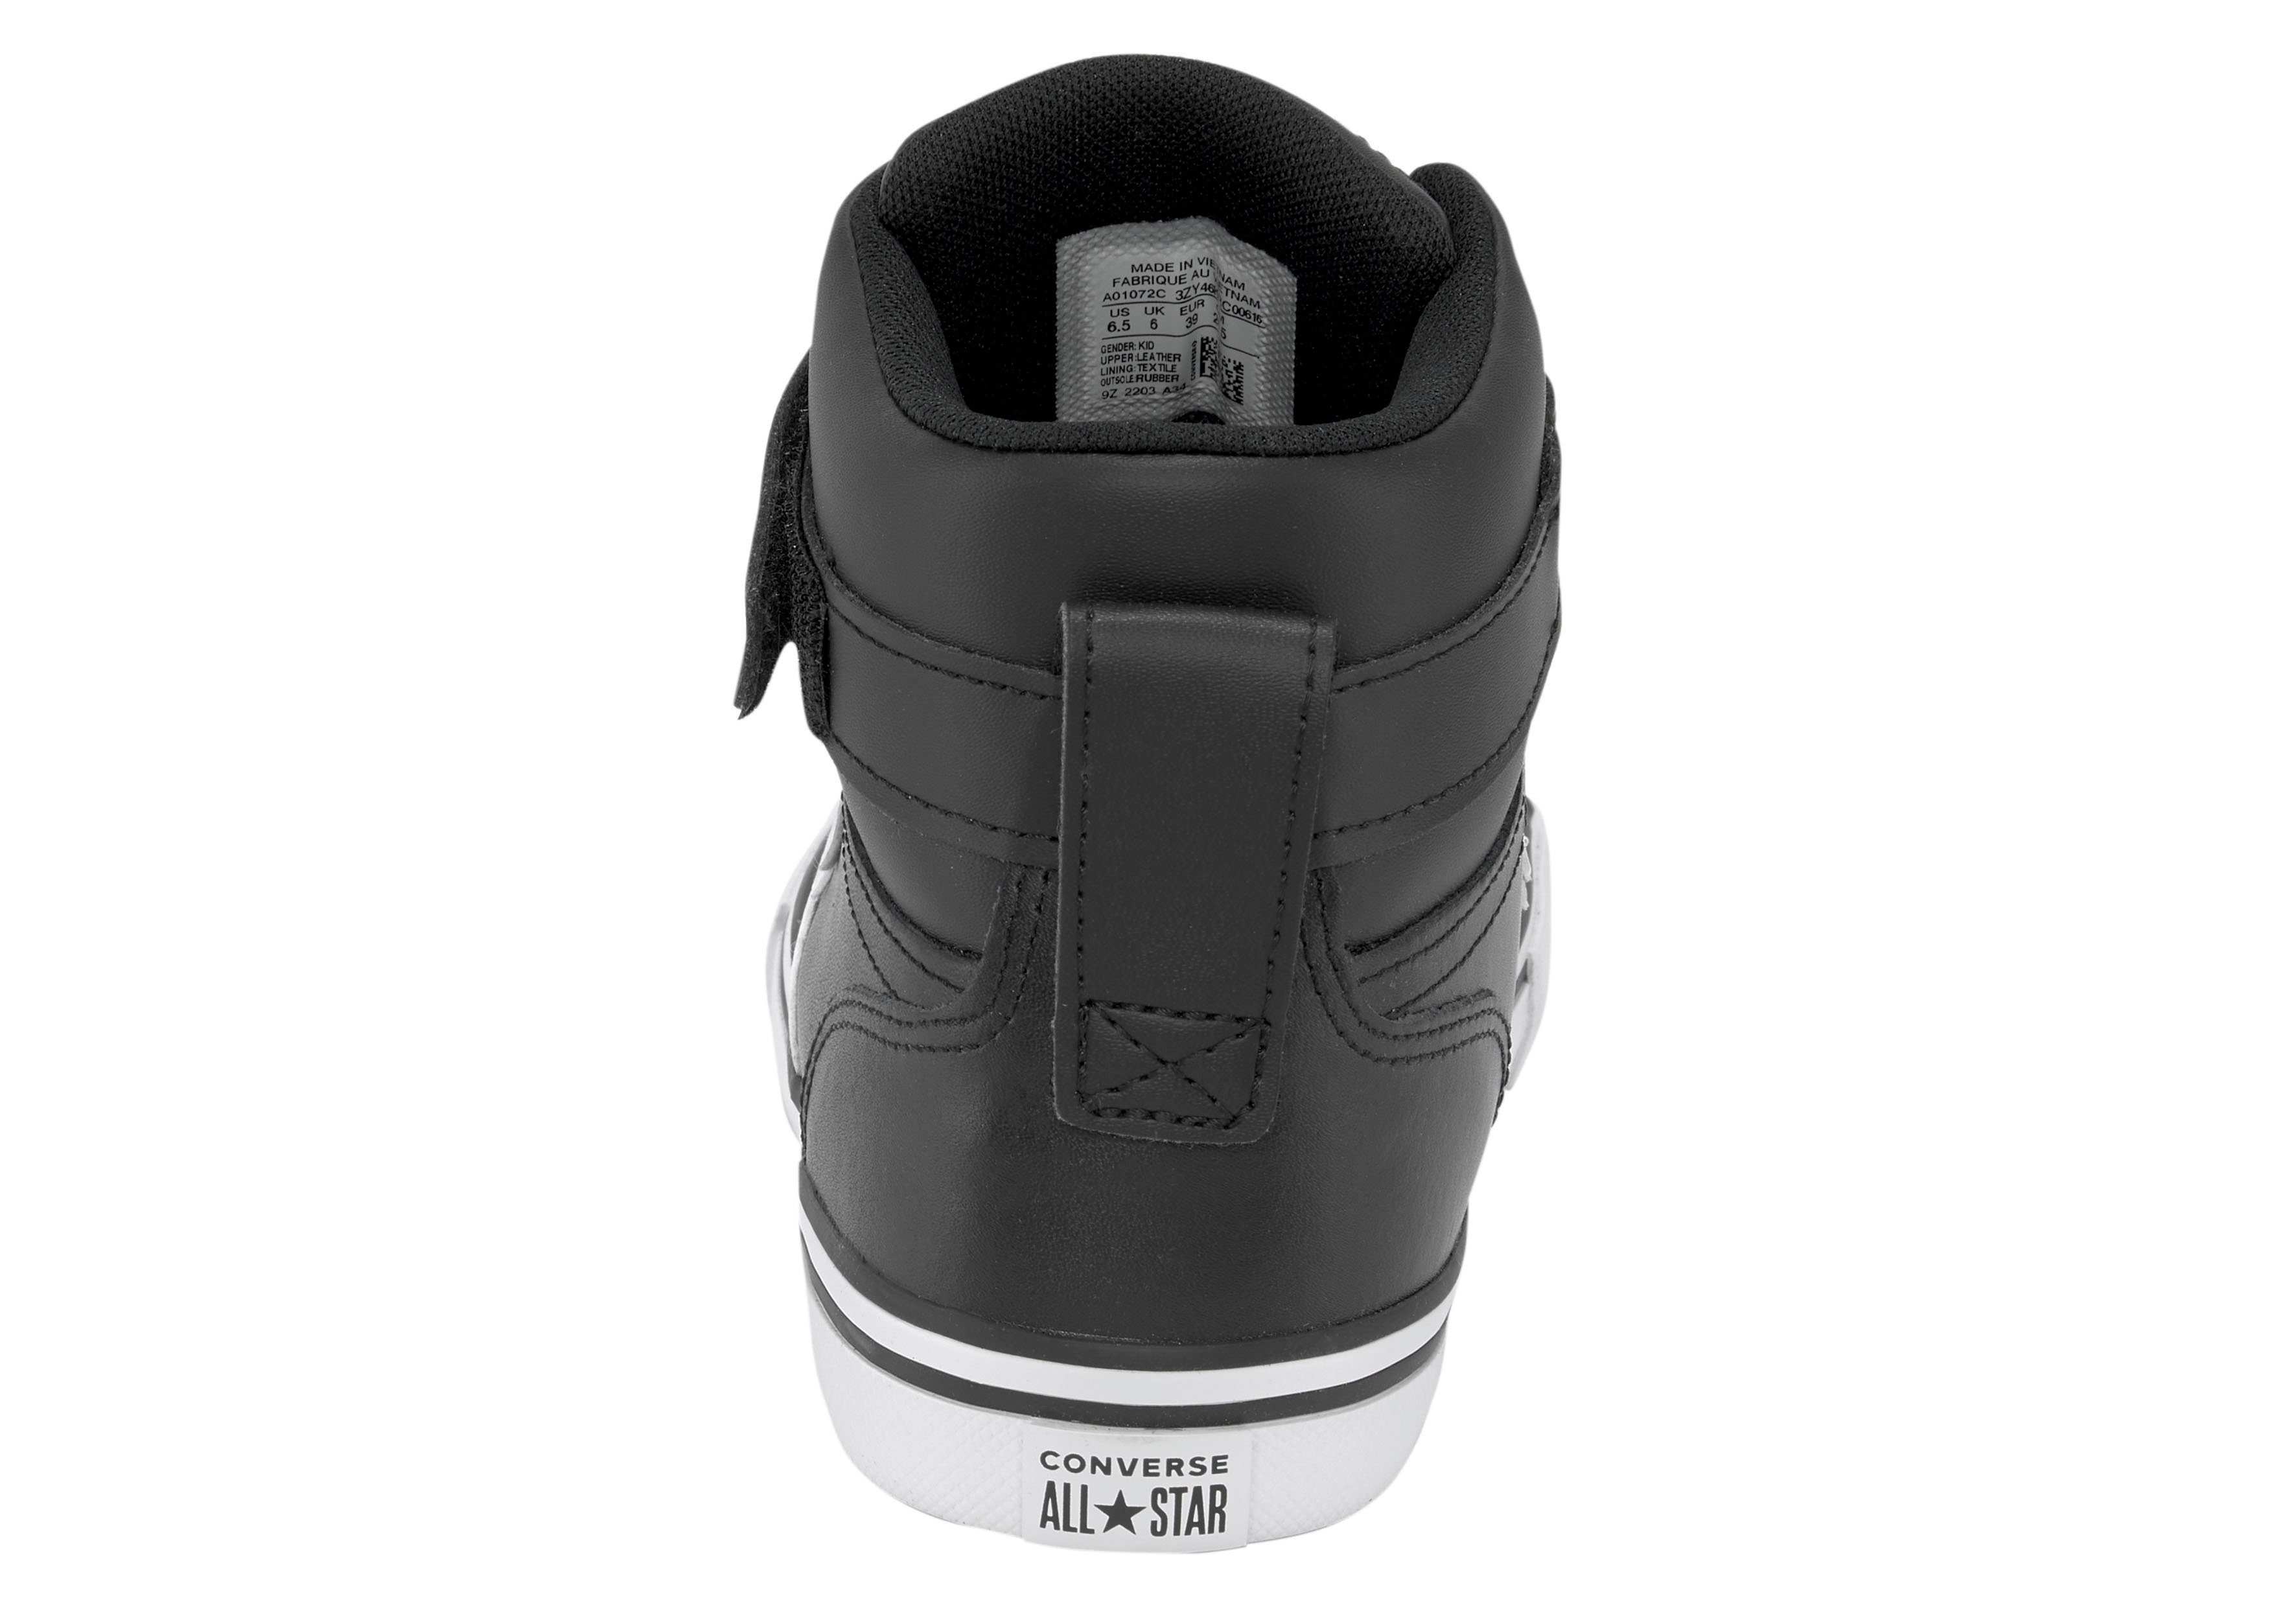 STRAP PRO schwarz-weiß Converse BLAZE Sneaker LEATHER